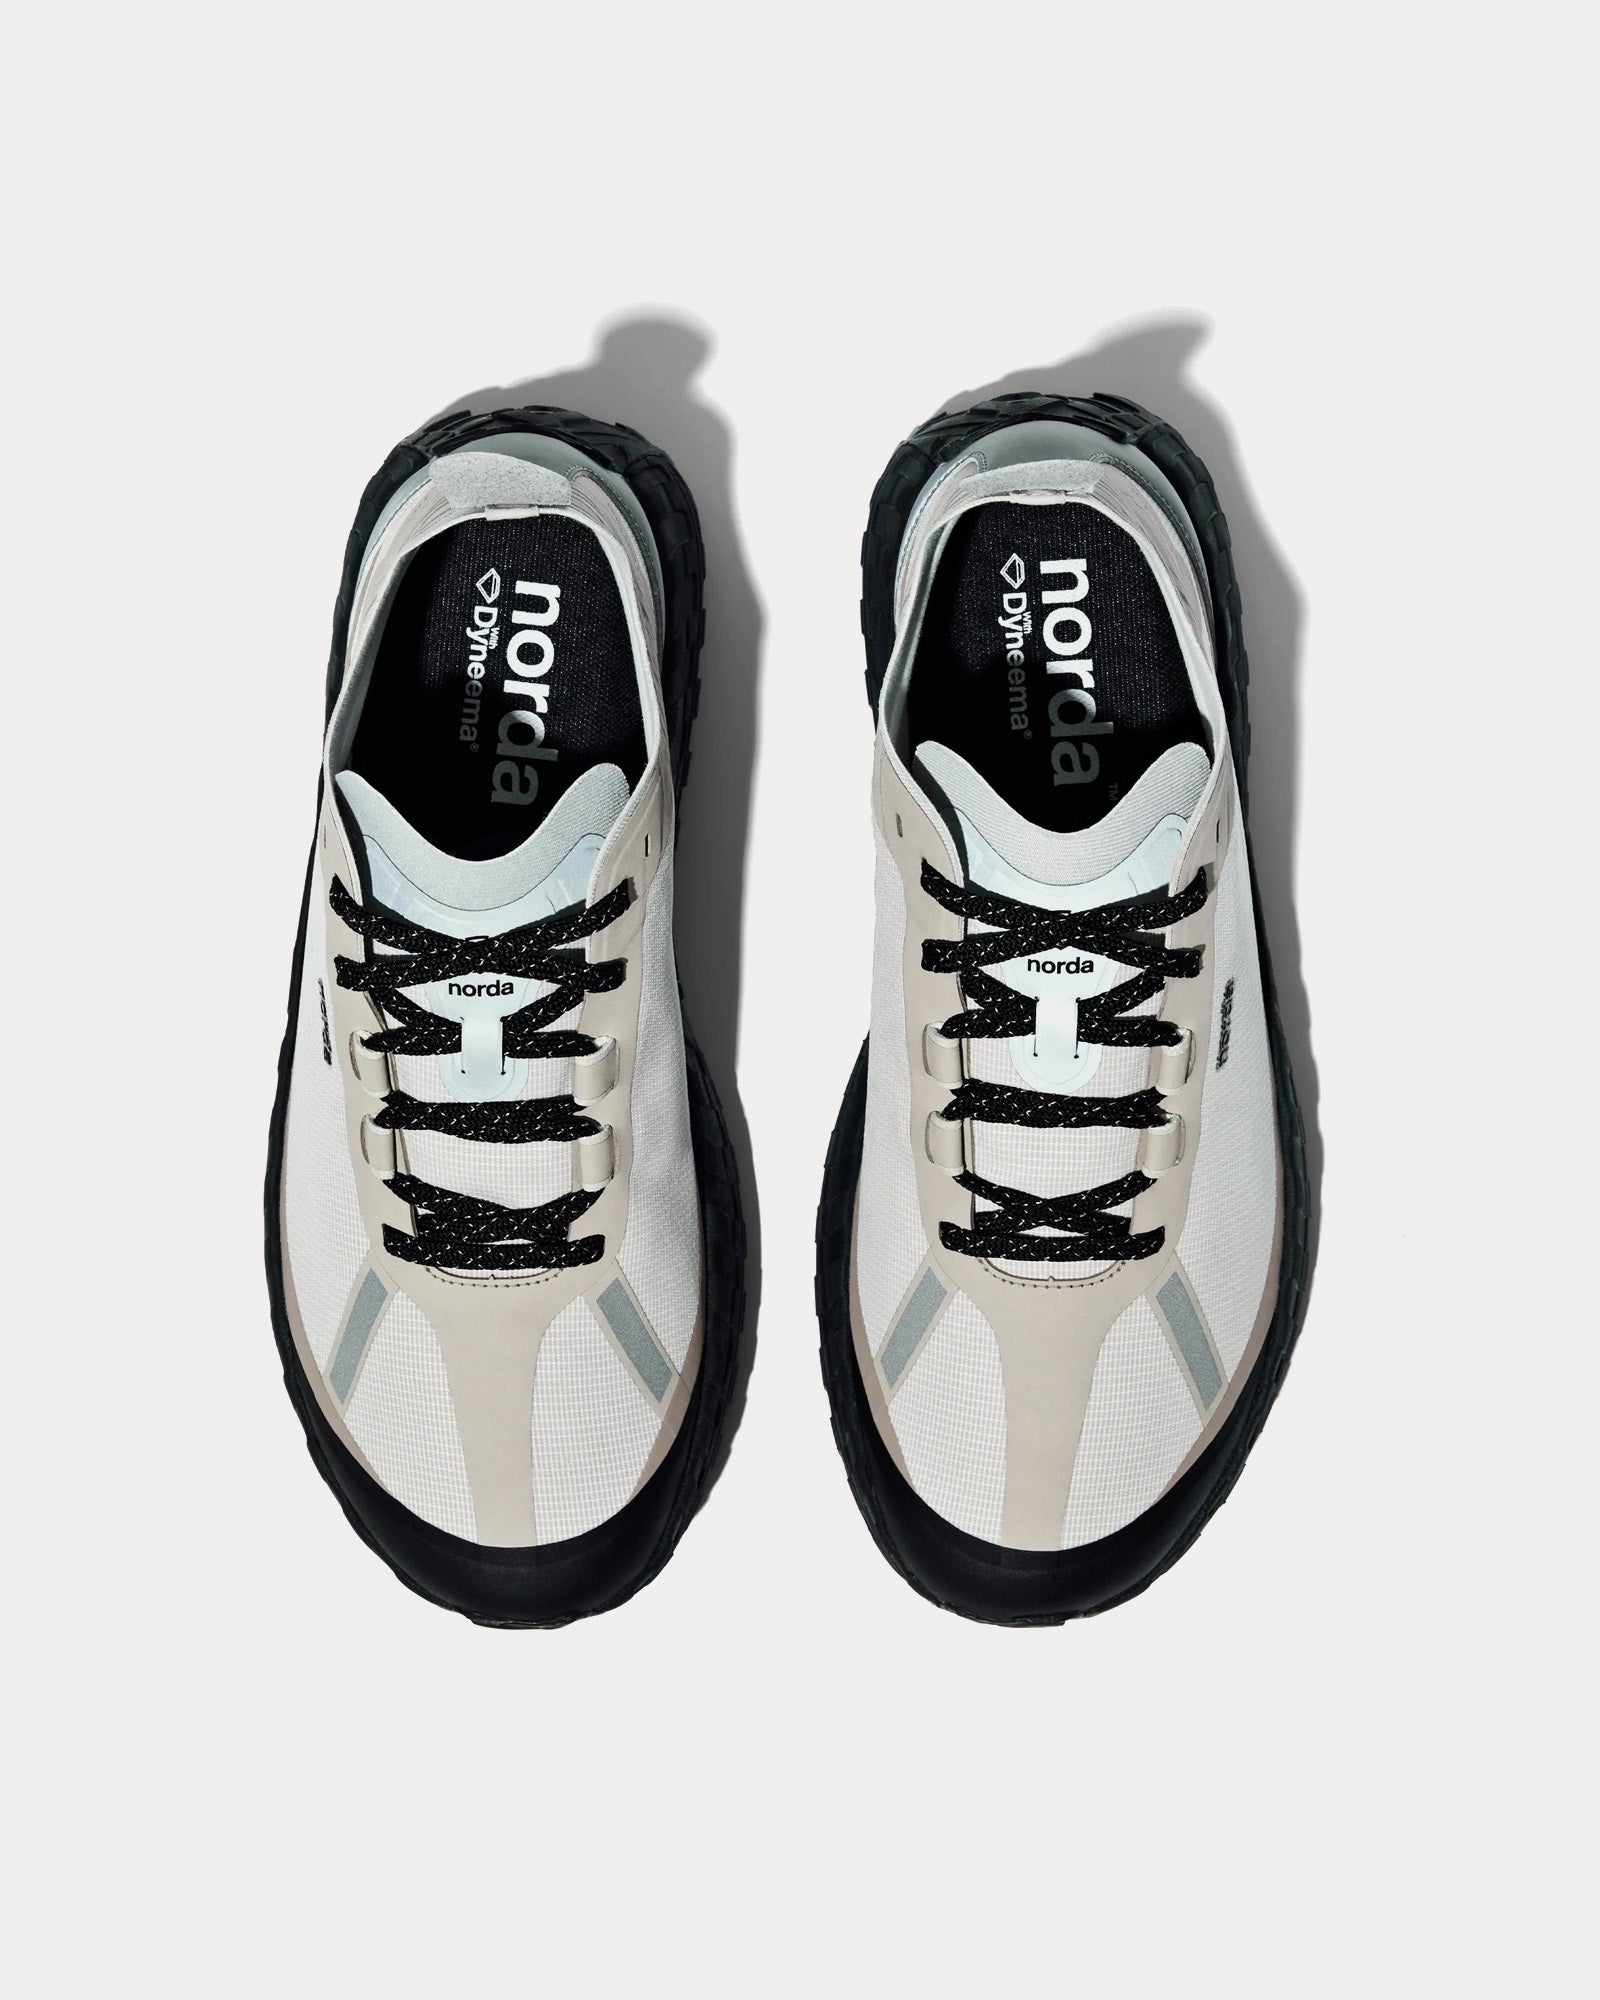 Norda - 001 M Cinder Running Shoes